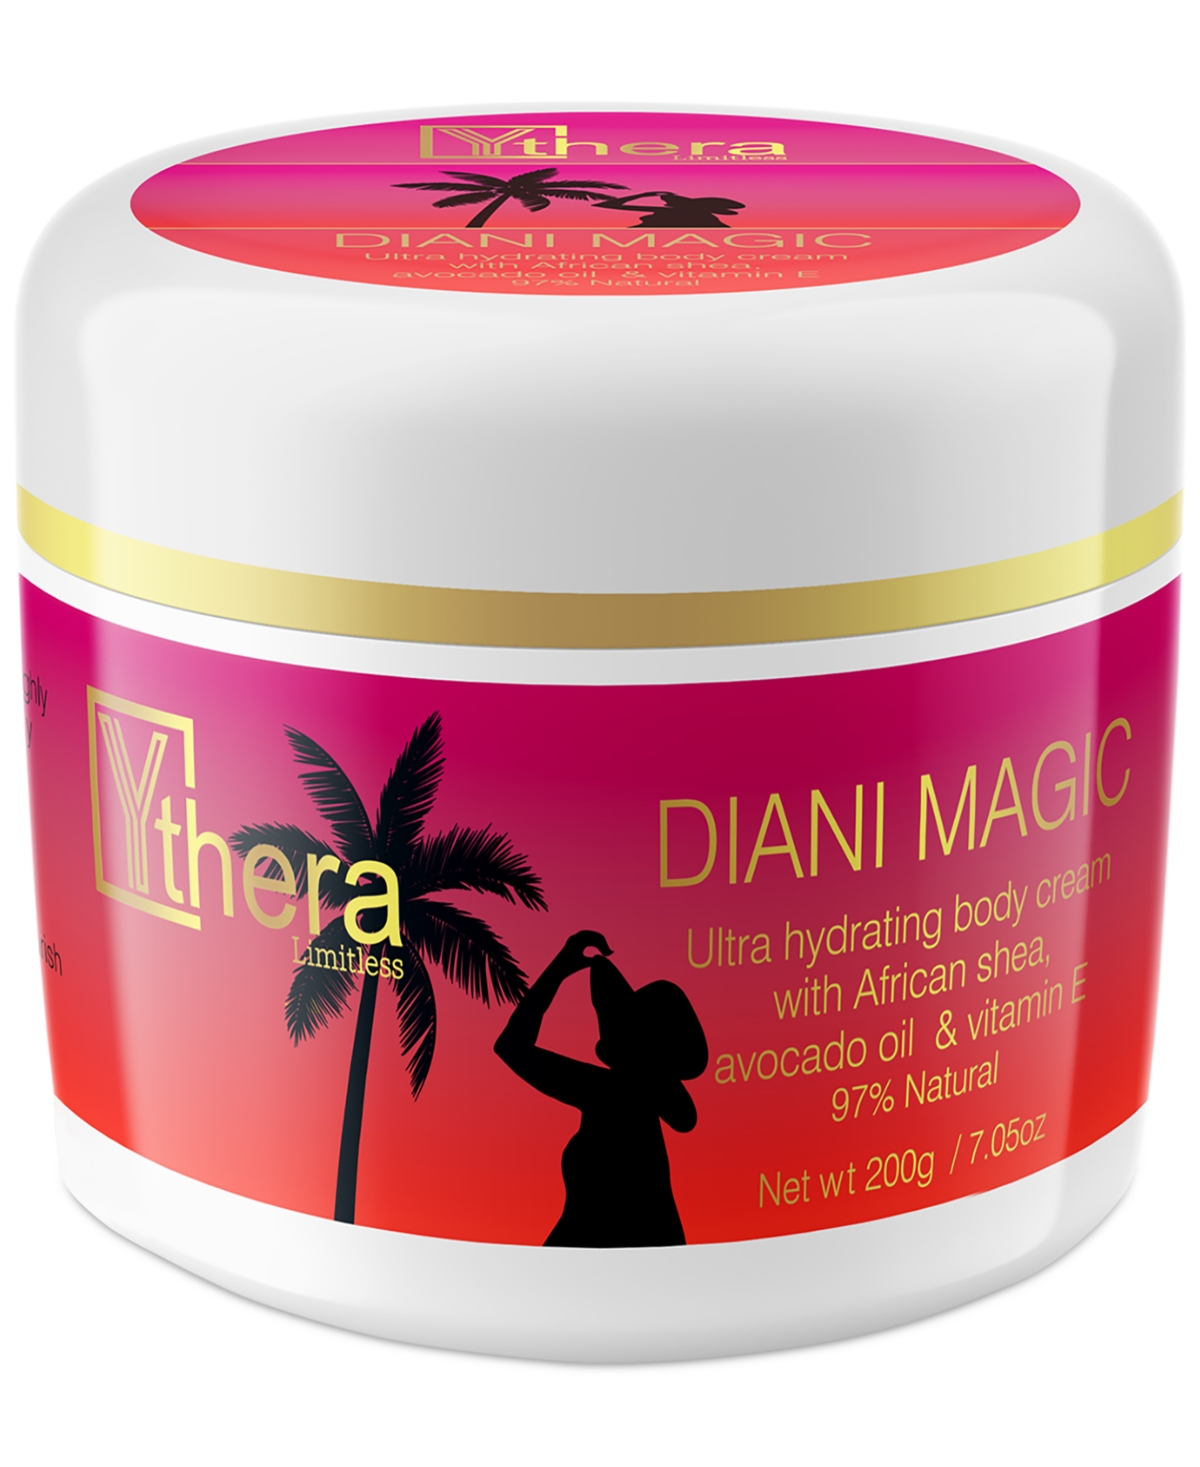 Diani Magic Ultra Hydrating Body Cream, 7.05 oz.